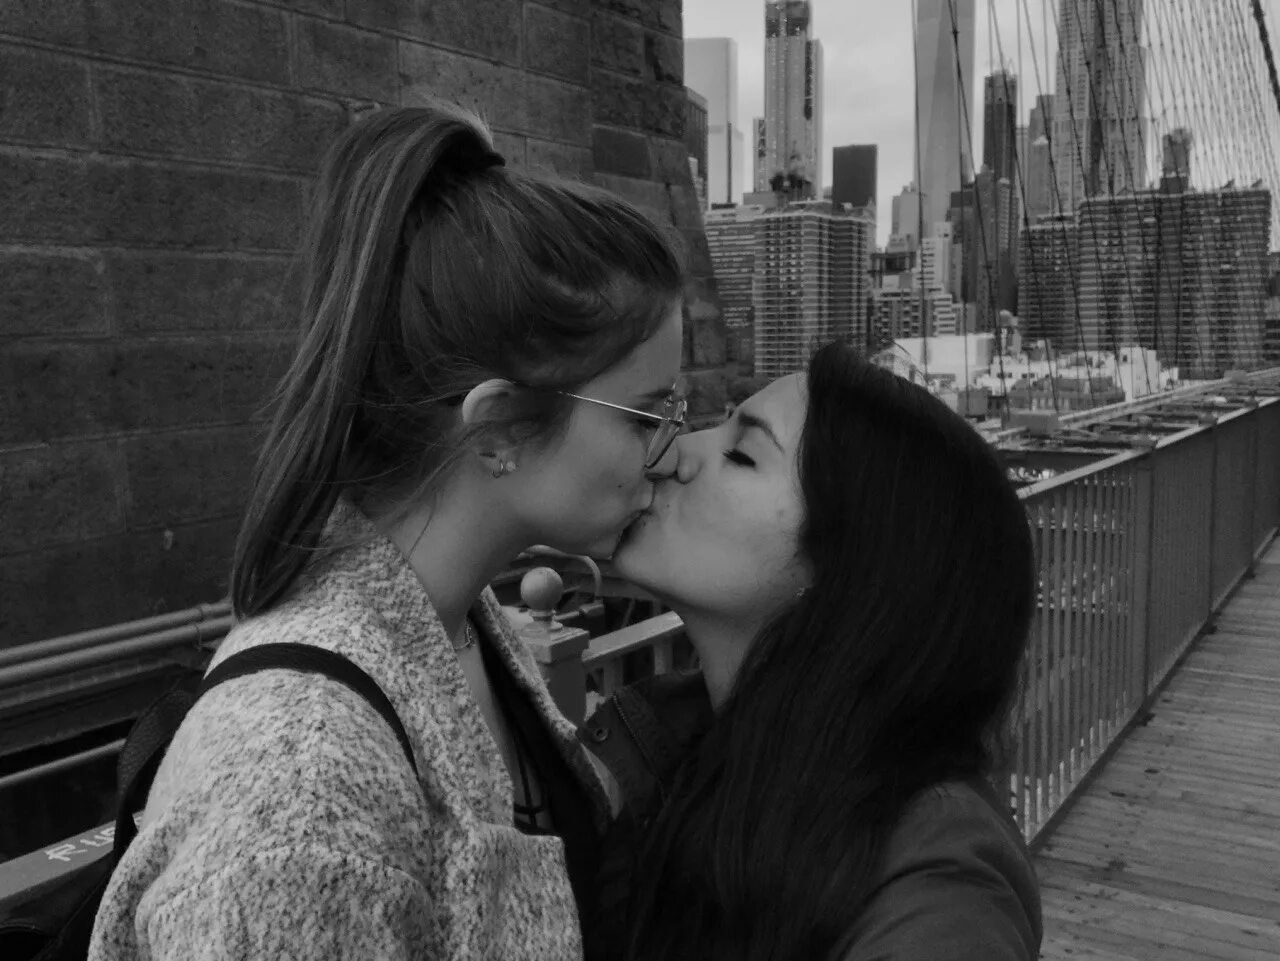 Booted lesbian. Поцелуй девушек. Девушки целуются. Поцелуй девушки с девушкой. Поцелуй двух девушек.